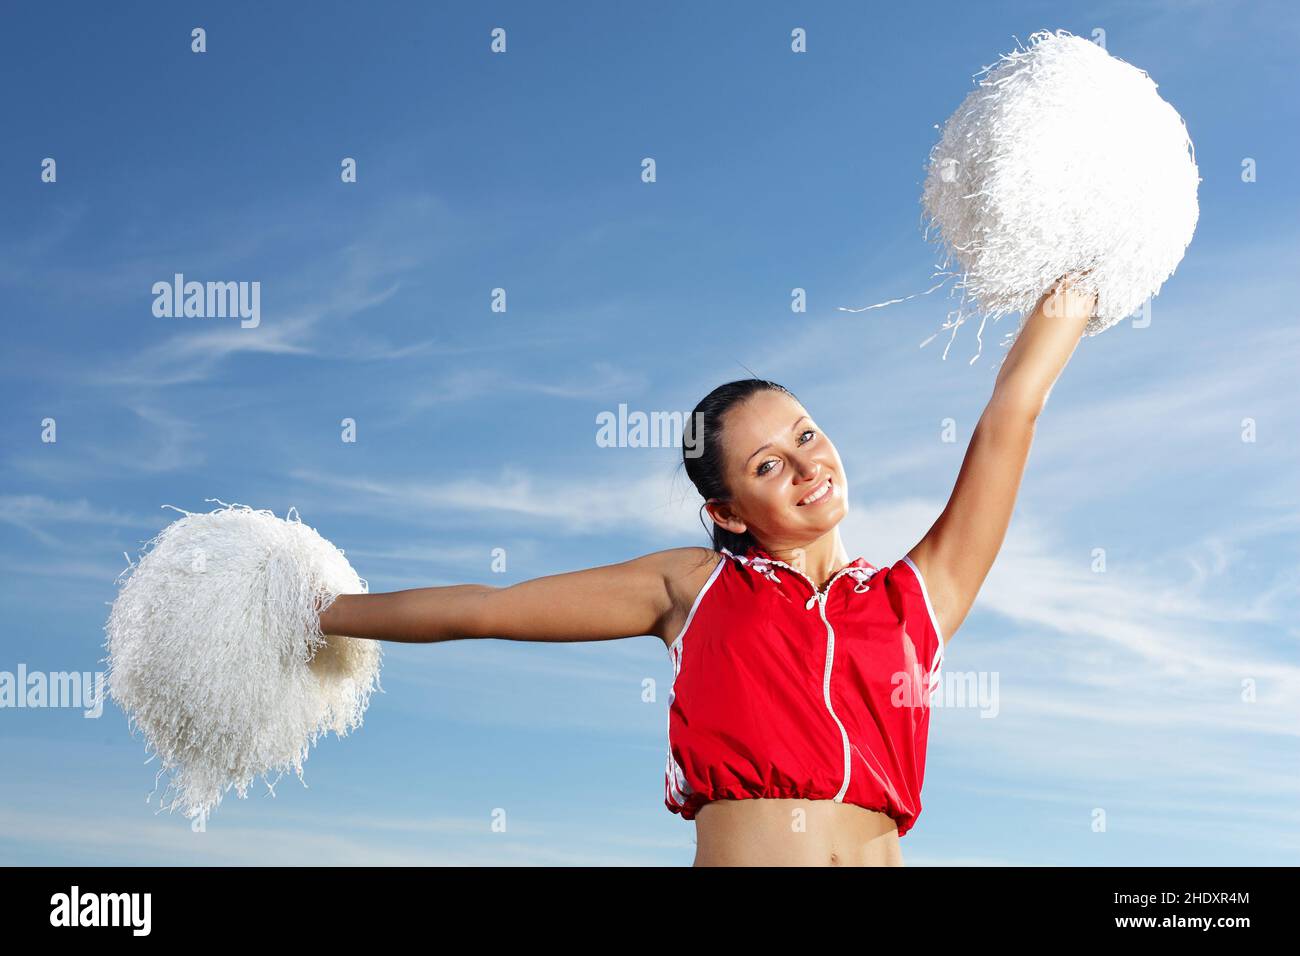 cheering, cheerleader, pom pom, cheerleaders, cheerleading, pom-poms Stock Photo